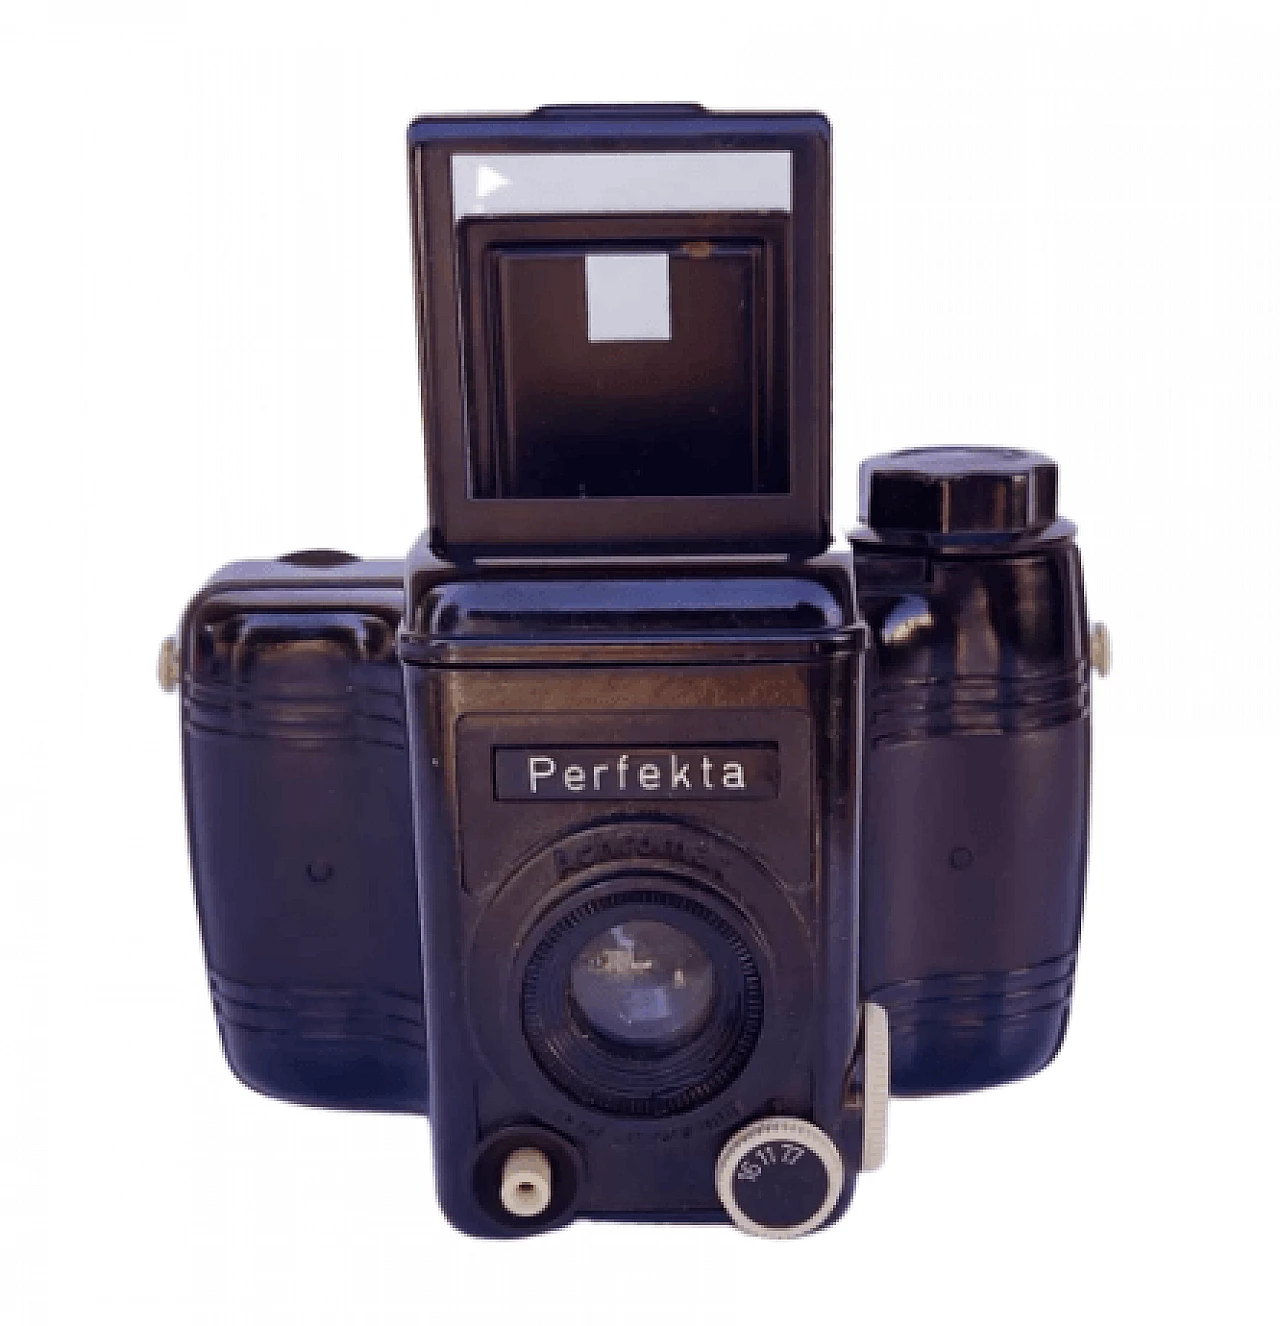 Perfekta Aeromat camera by VEB Rheinmatall, 1950s 12